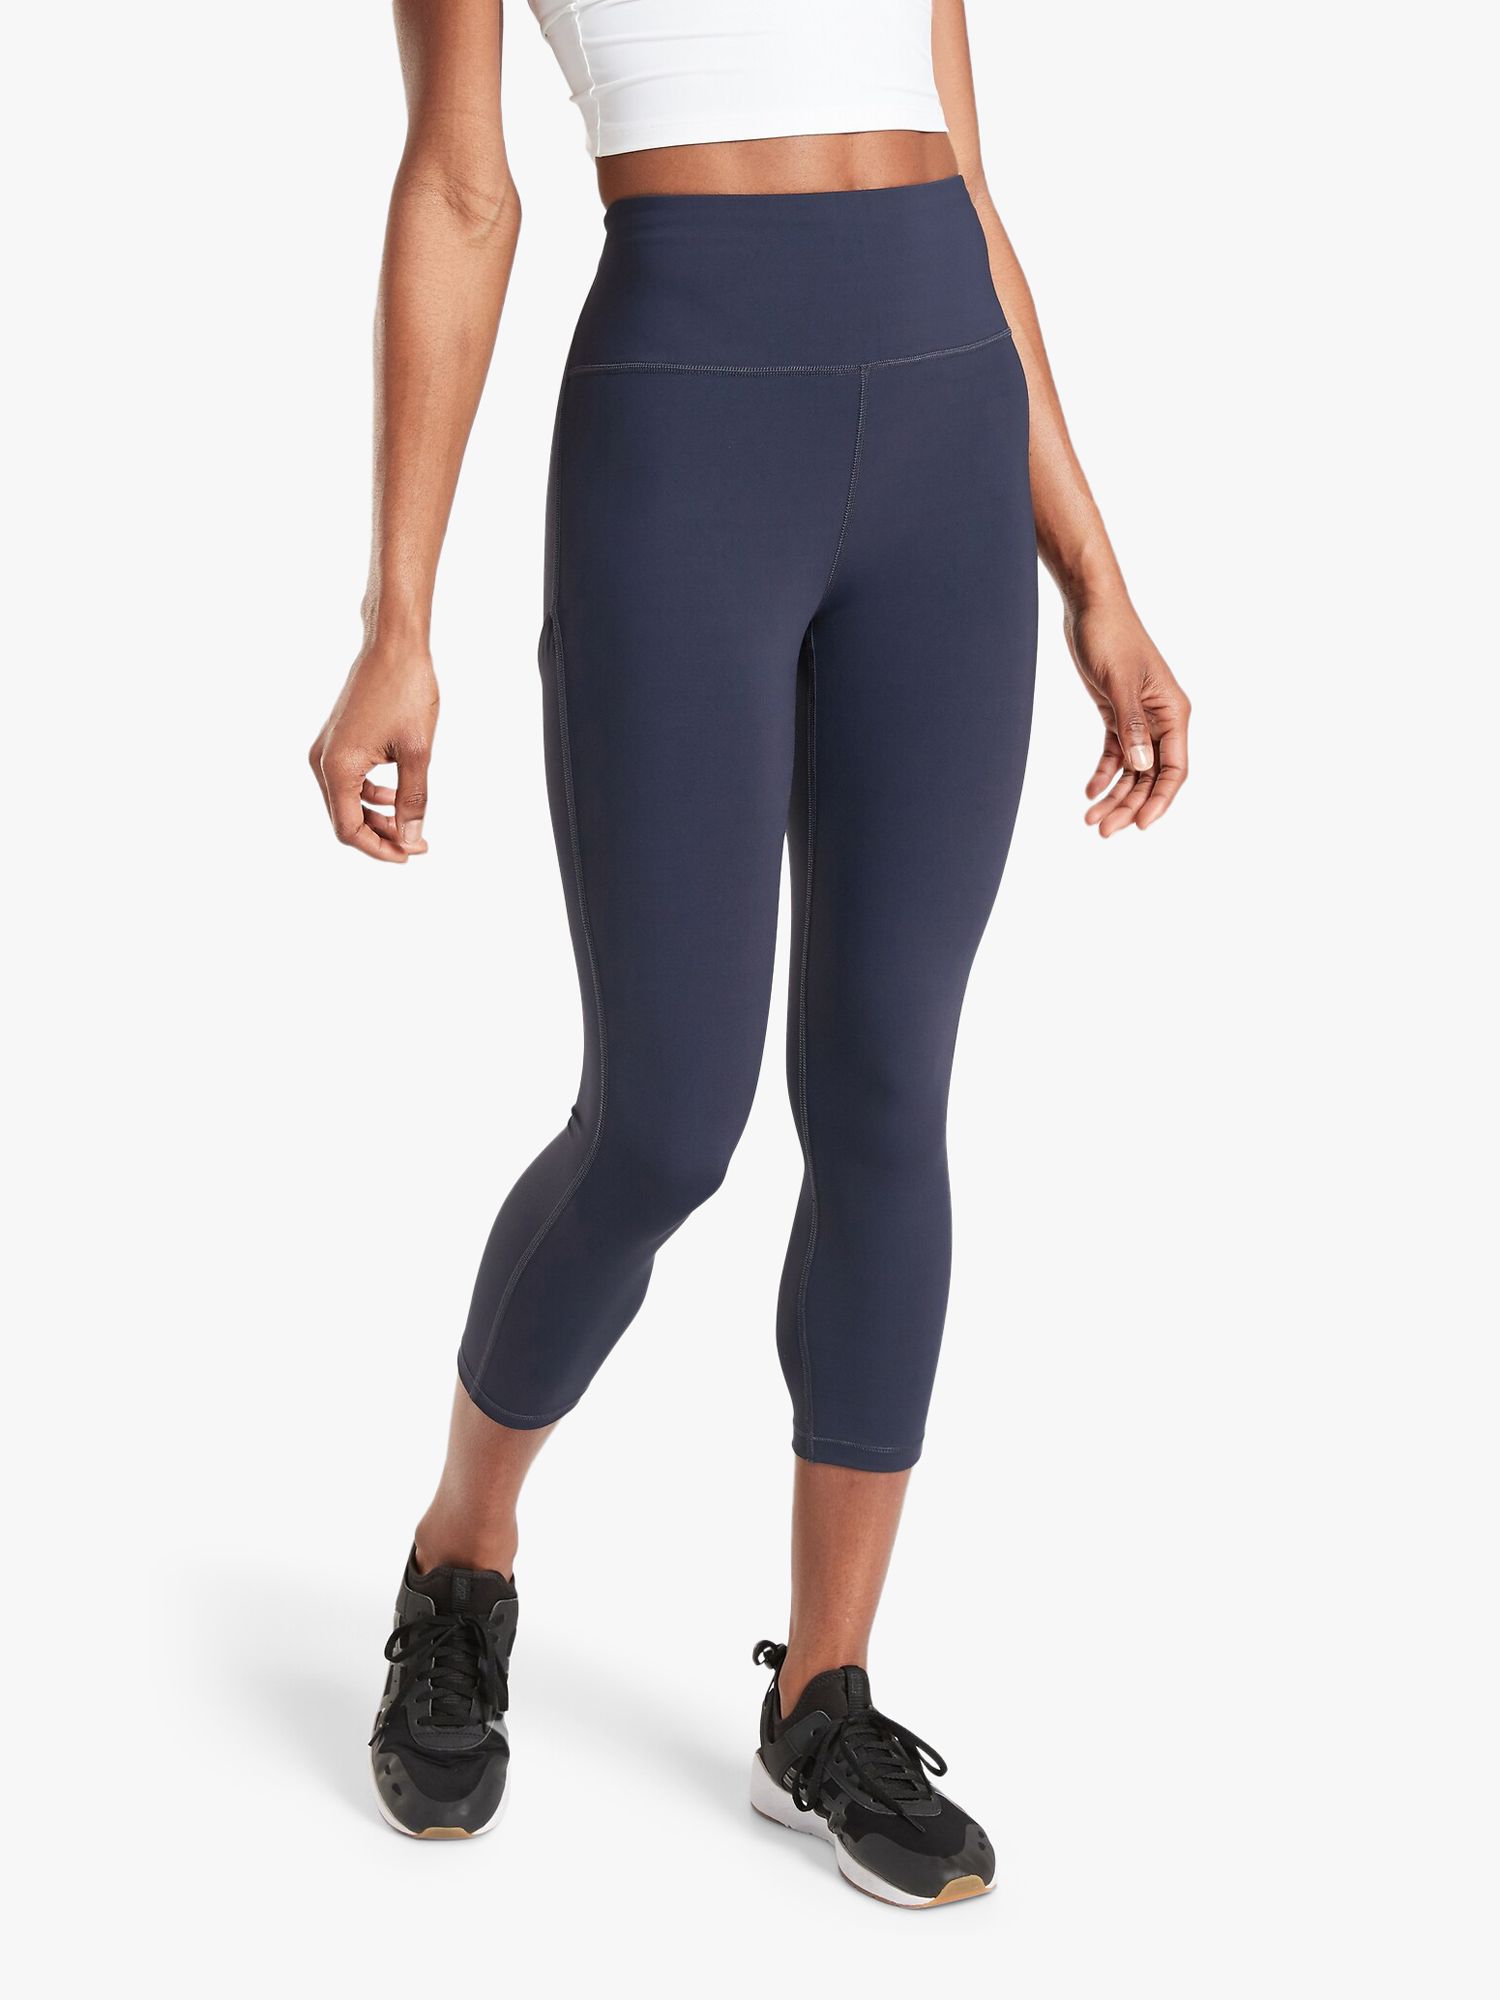 10 workout leggings with pockets: Alo, Lululemon, Athleta, and